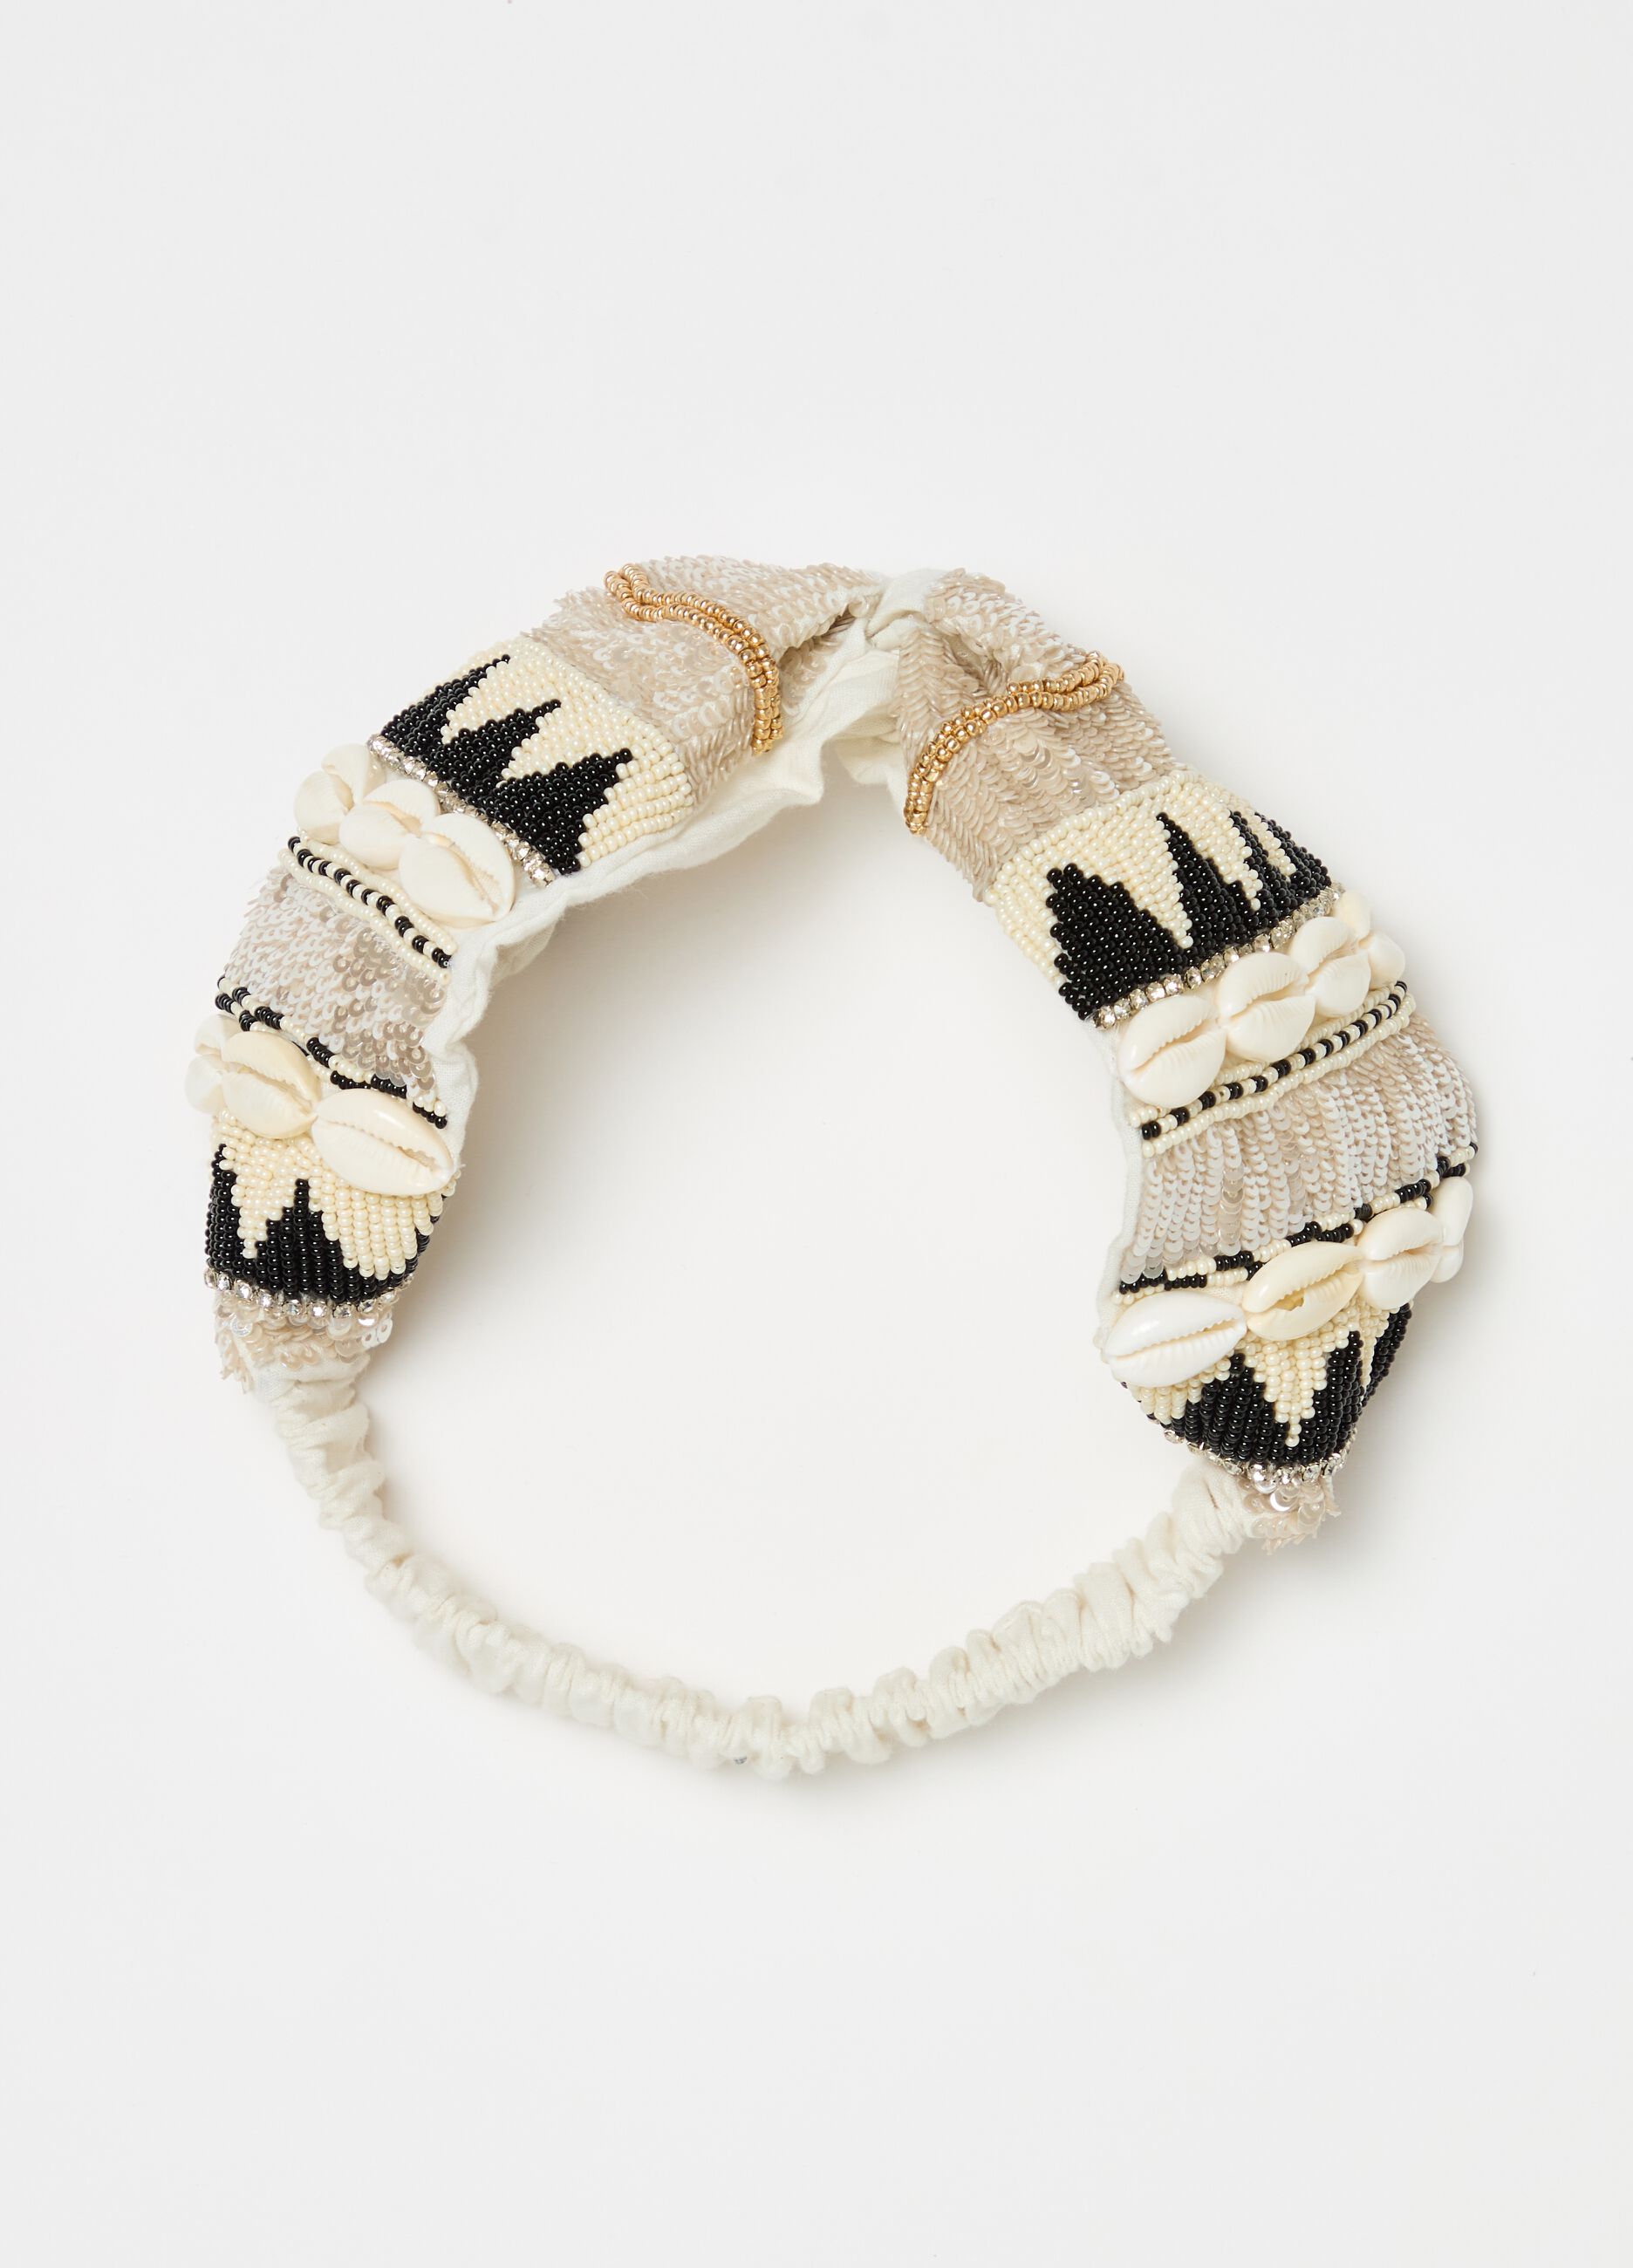 Headband with beads and shells